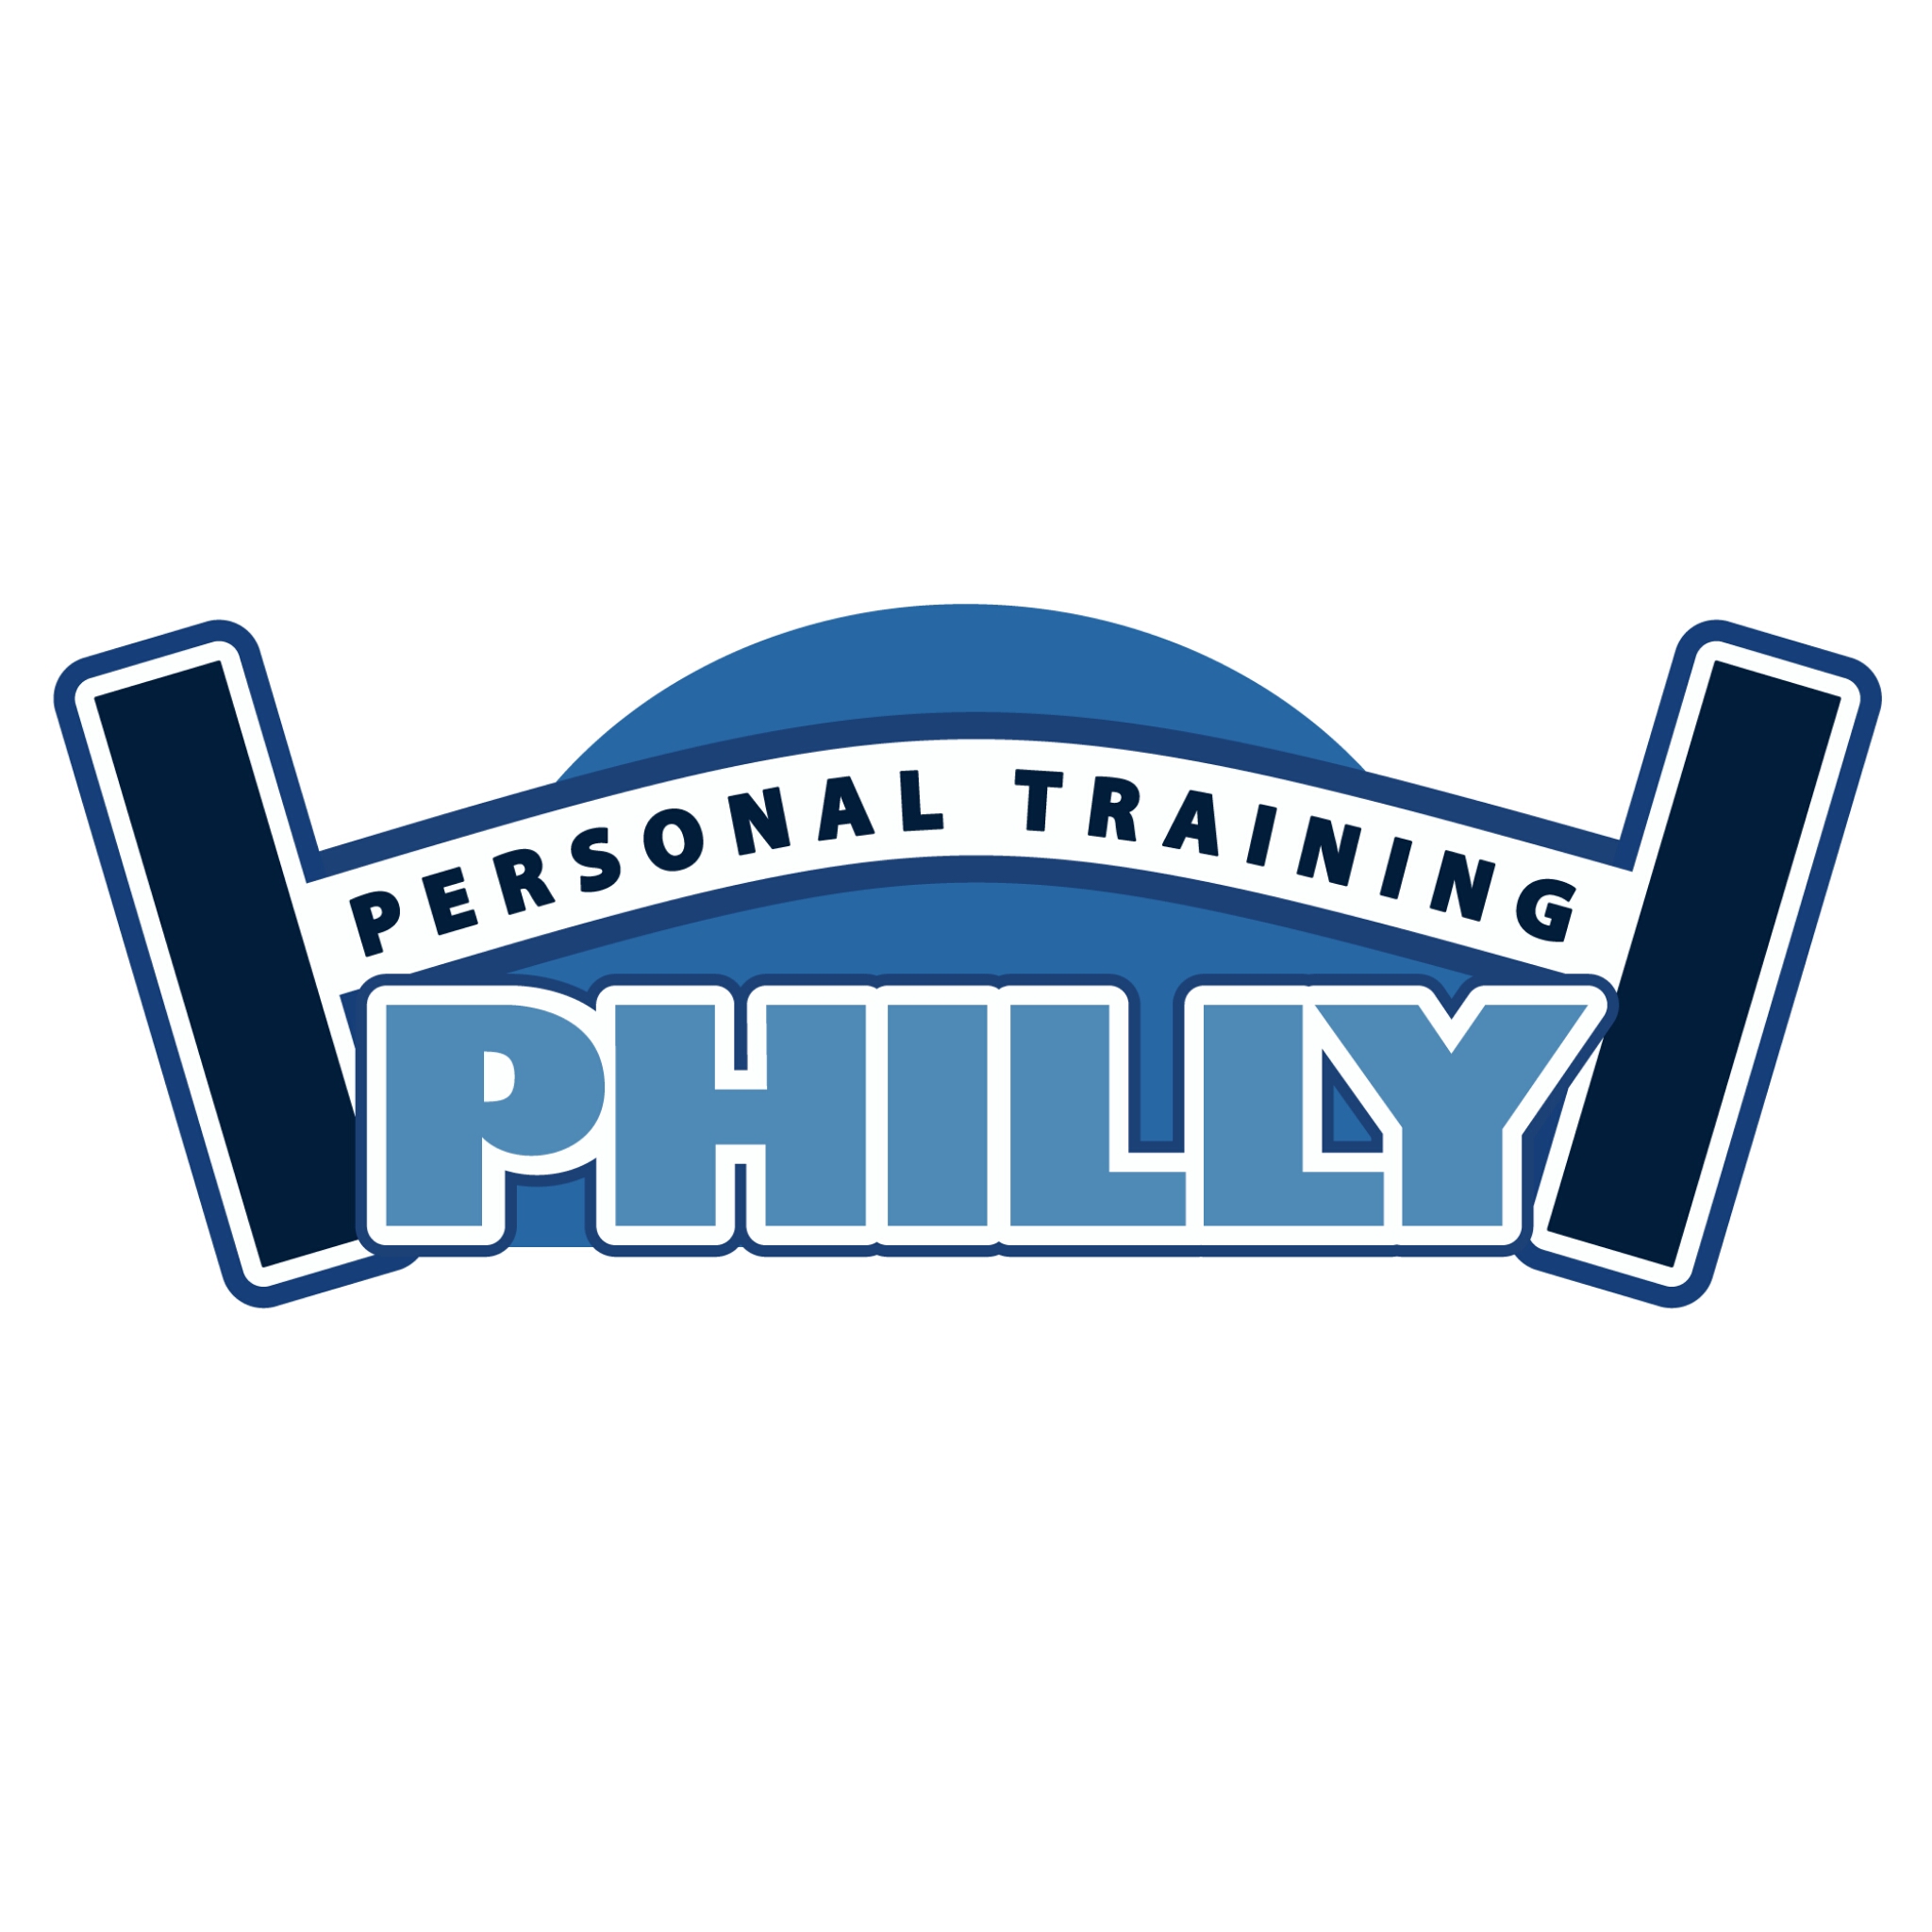 Philly Personal Training - Philadelphia, PA 19102 - (267)455-0100 | ShowMeLocal.com